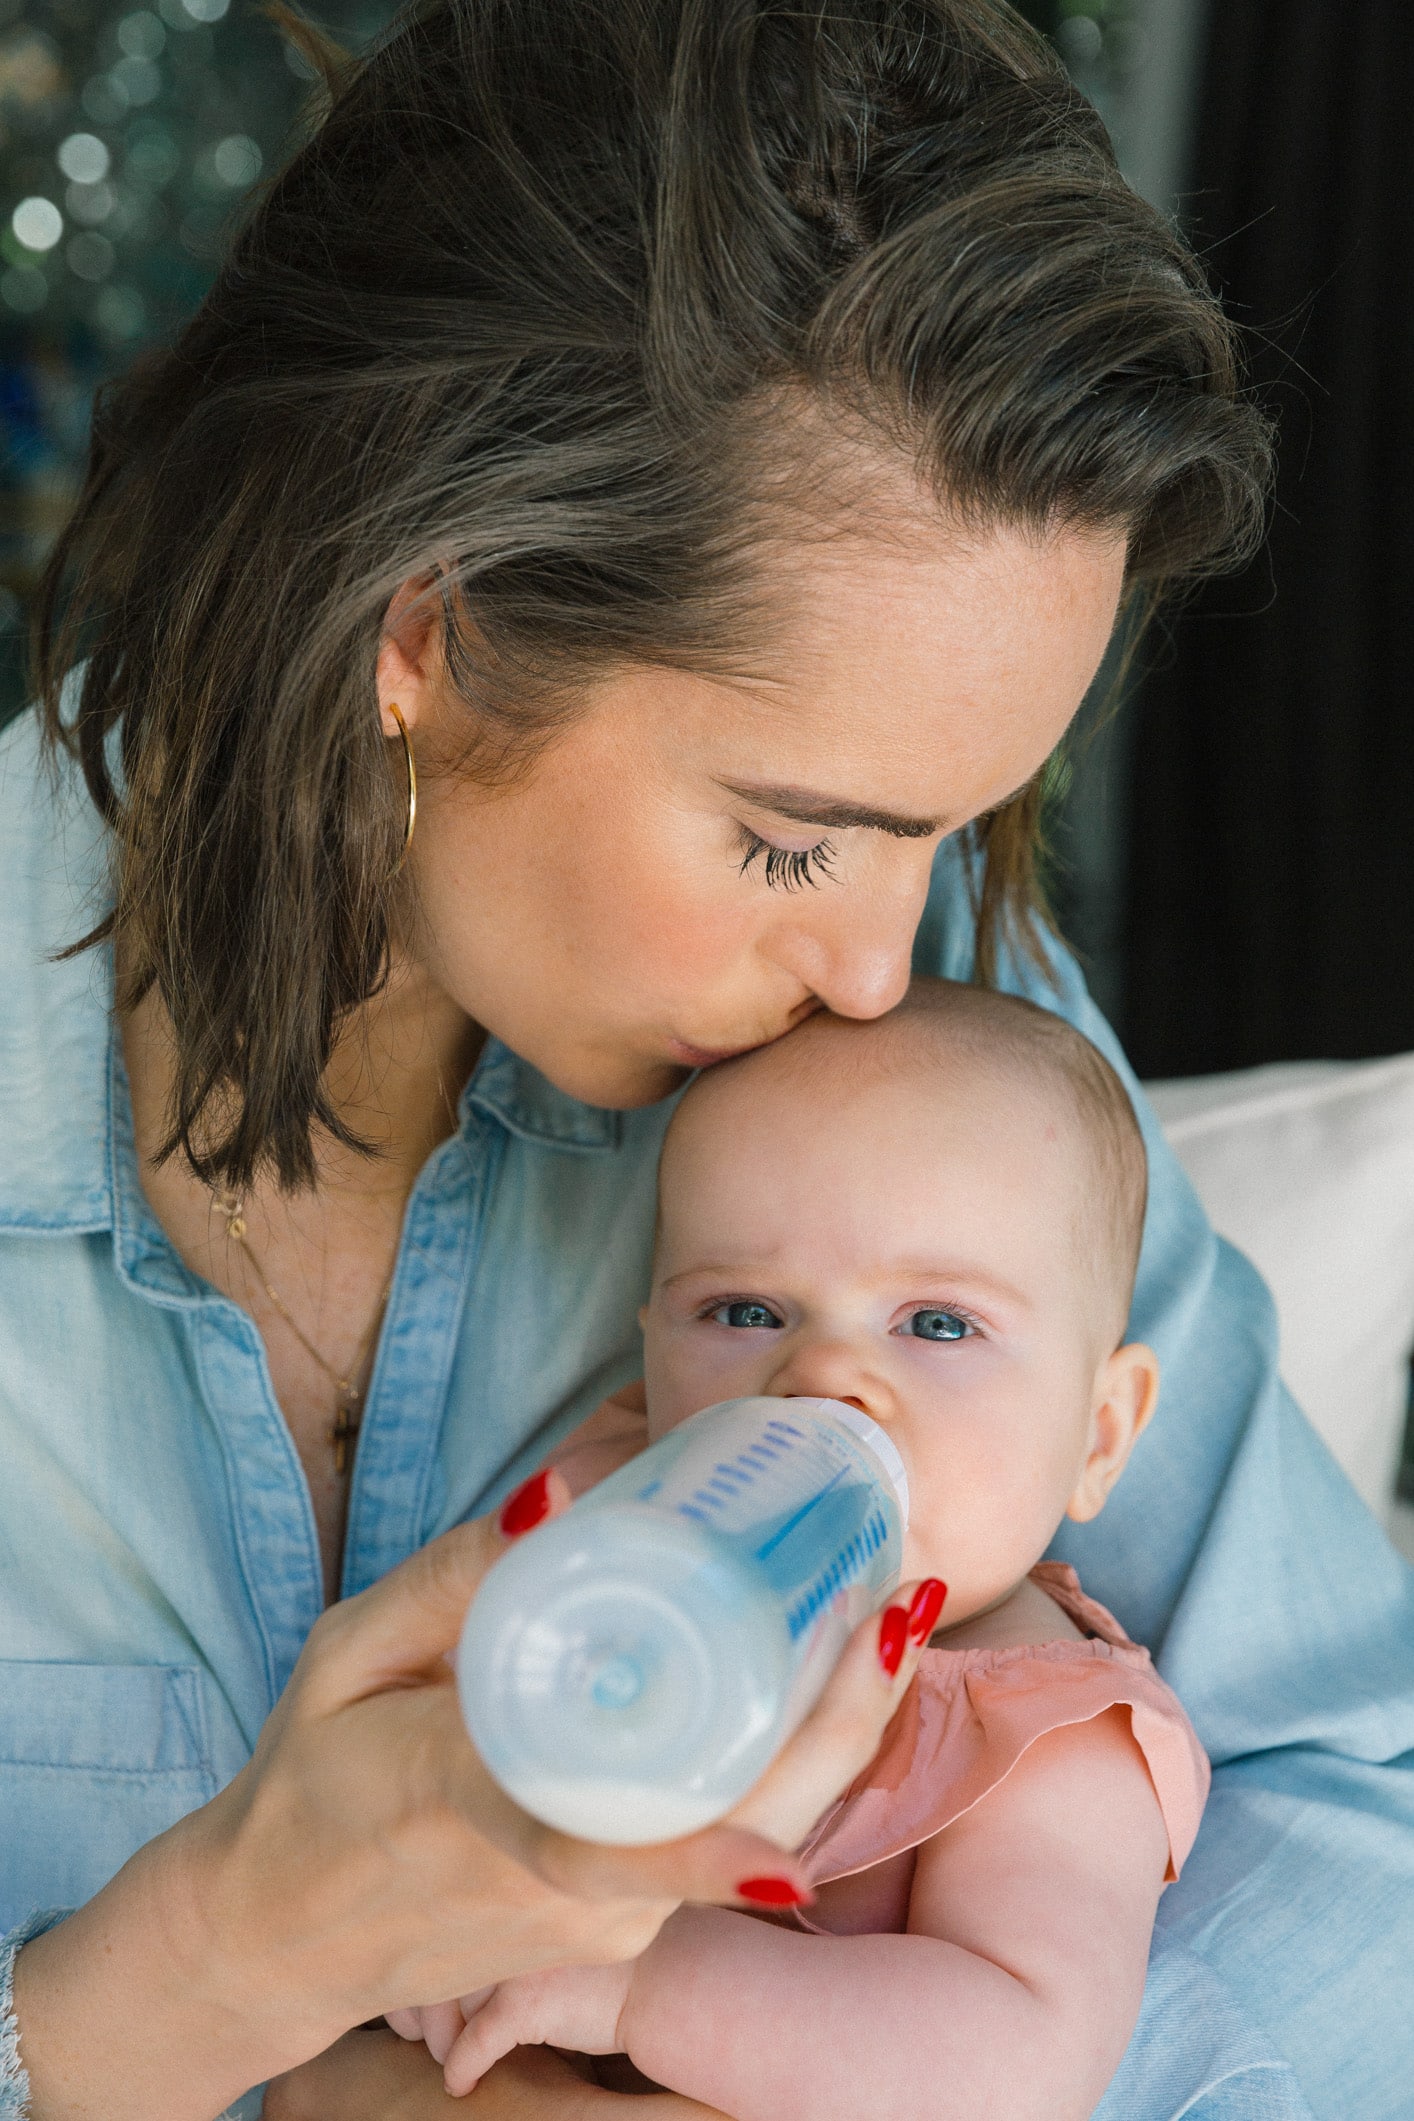 Mum Milestone: Transitioning Away From Breastfeeding